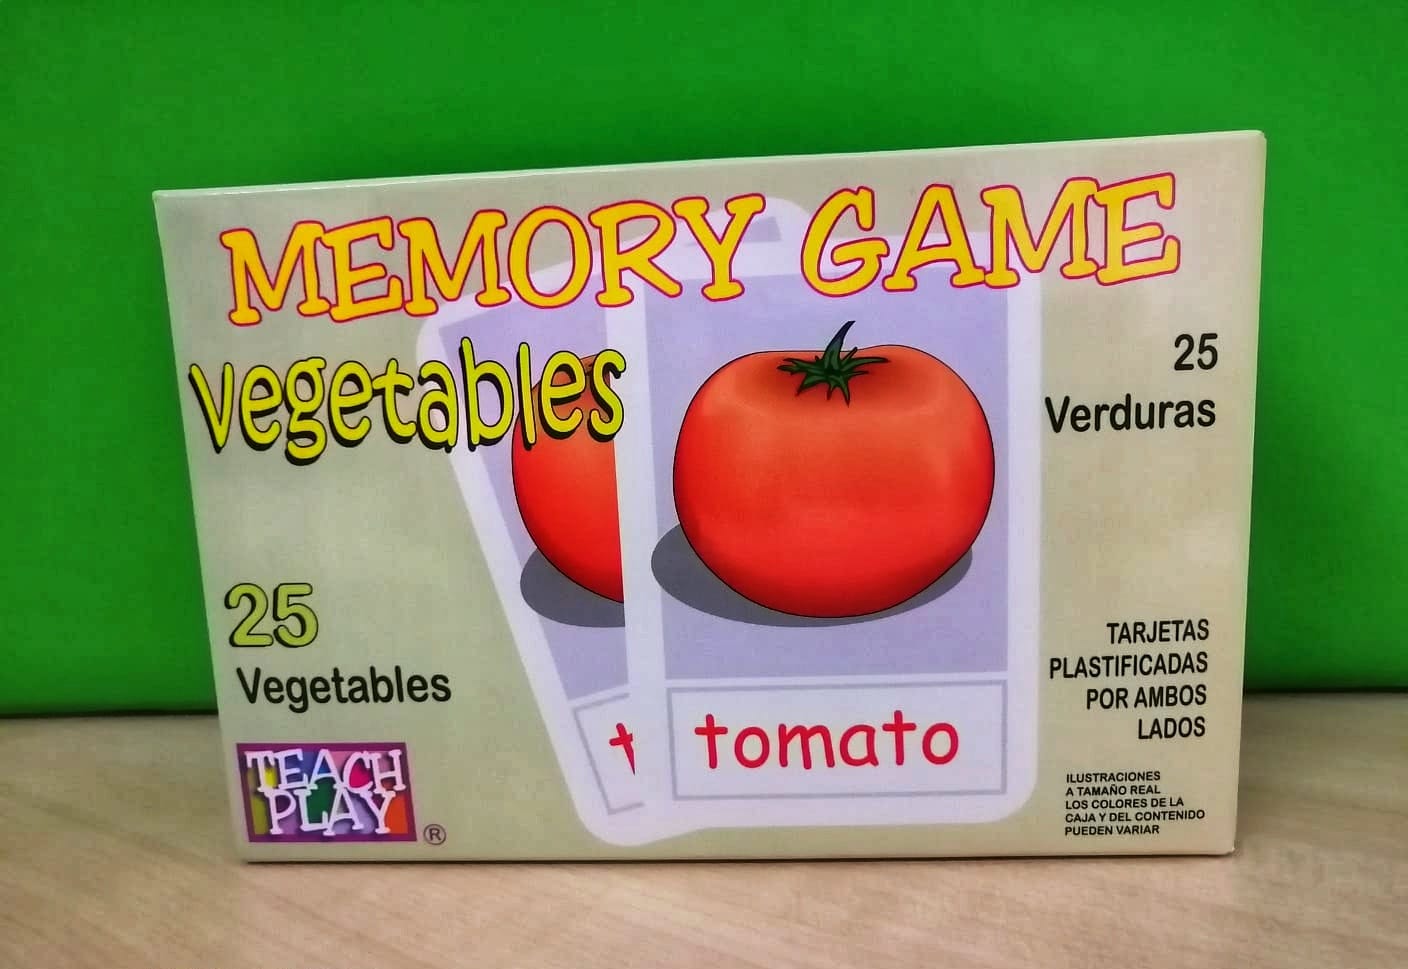 MEMORY GAME VEGETABLES